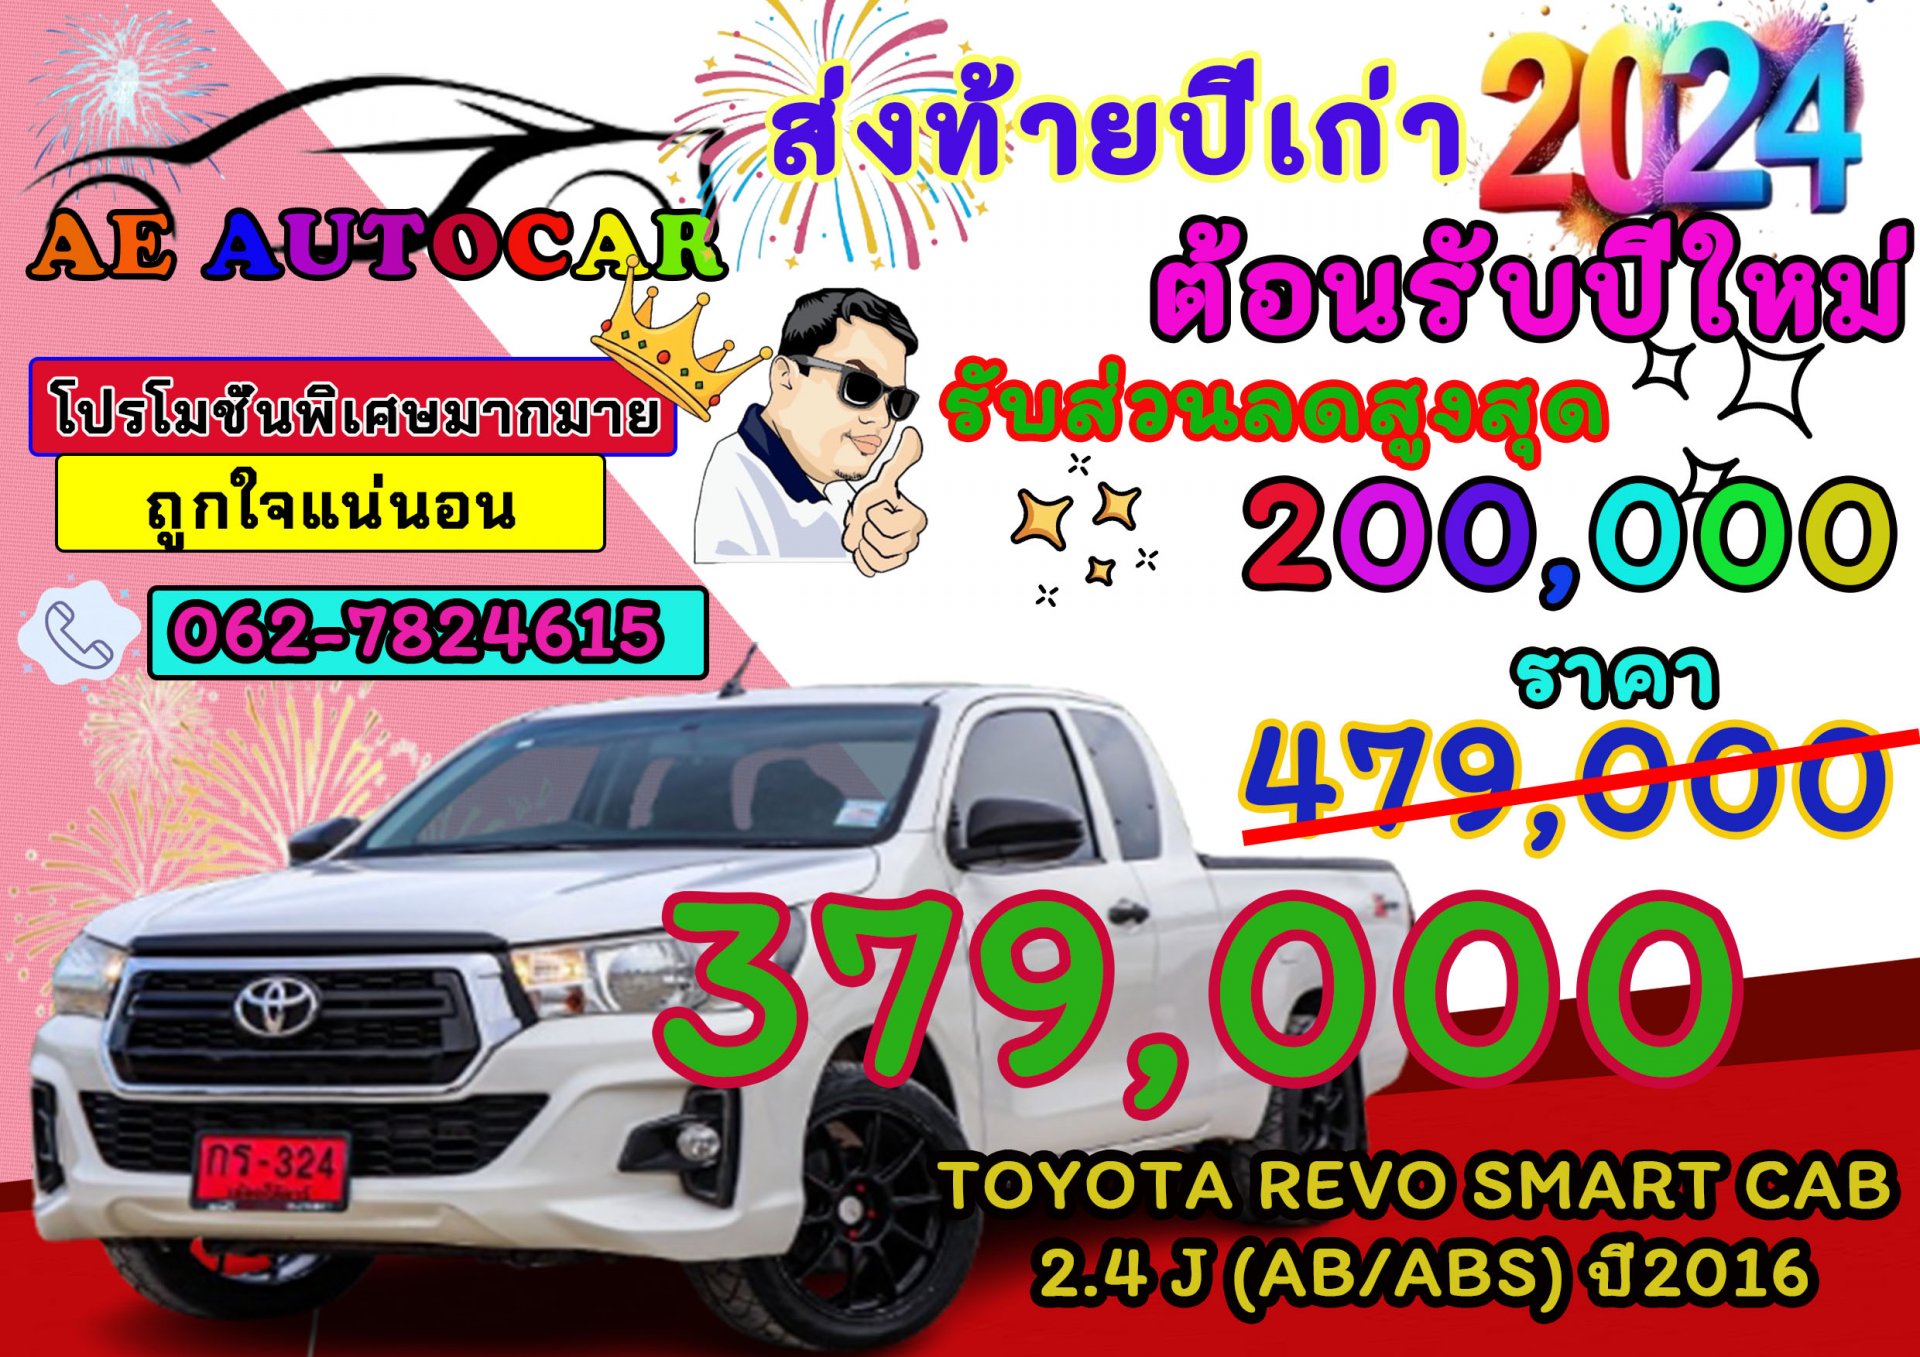 TOYOTA REVO SMART CAB 2.4 J (AB/ABS) ปี2016 ราคา 379,000 บาท